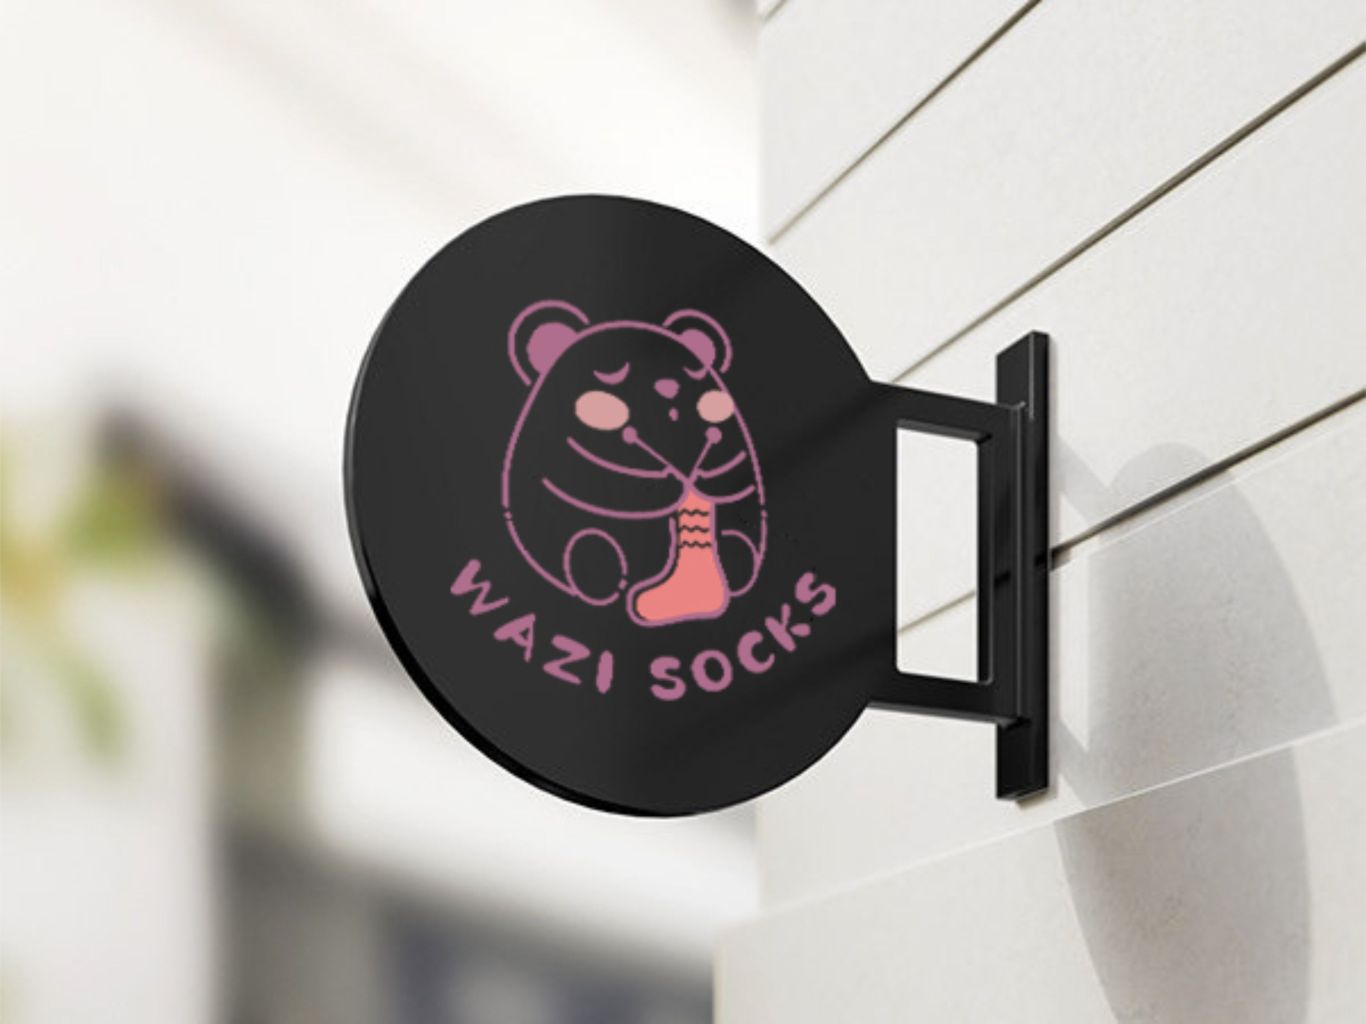 WAZI SOCKS 襪子品牌logo設計圖5